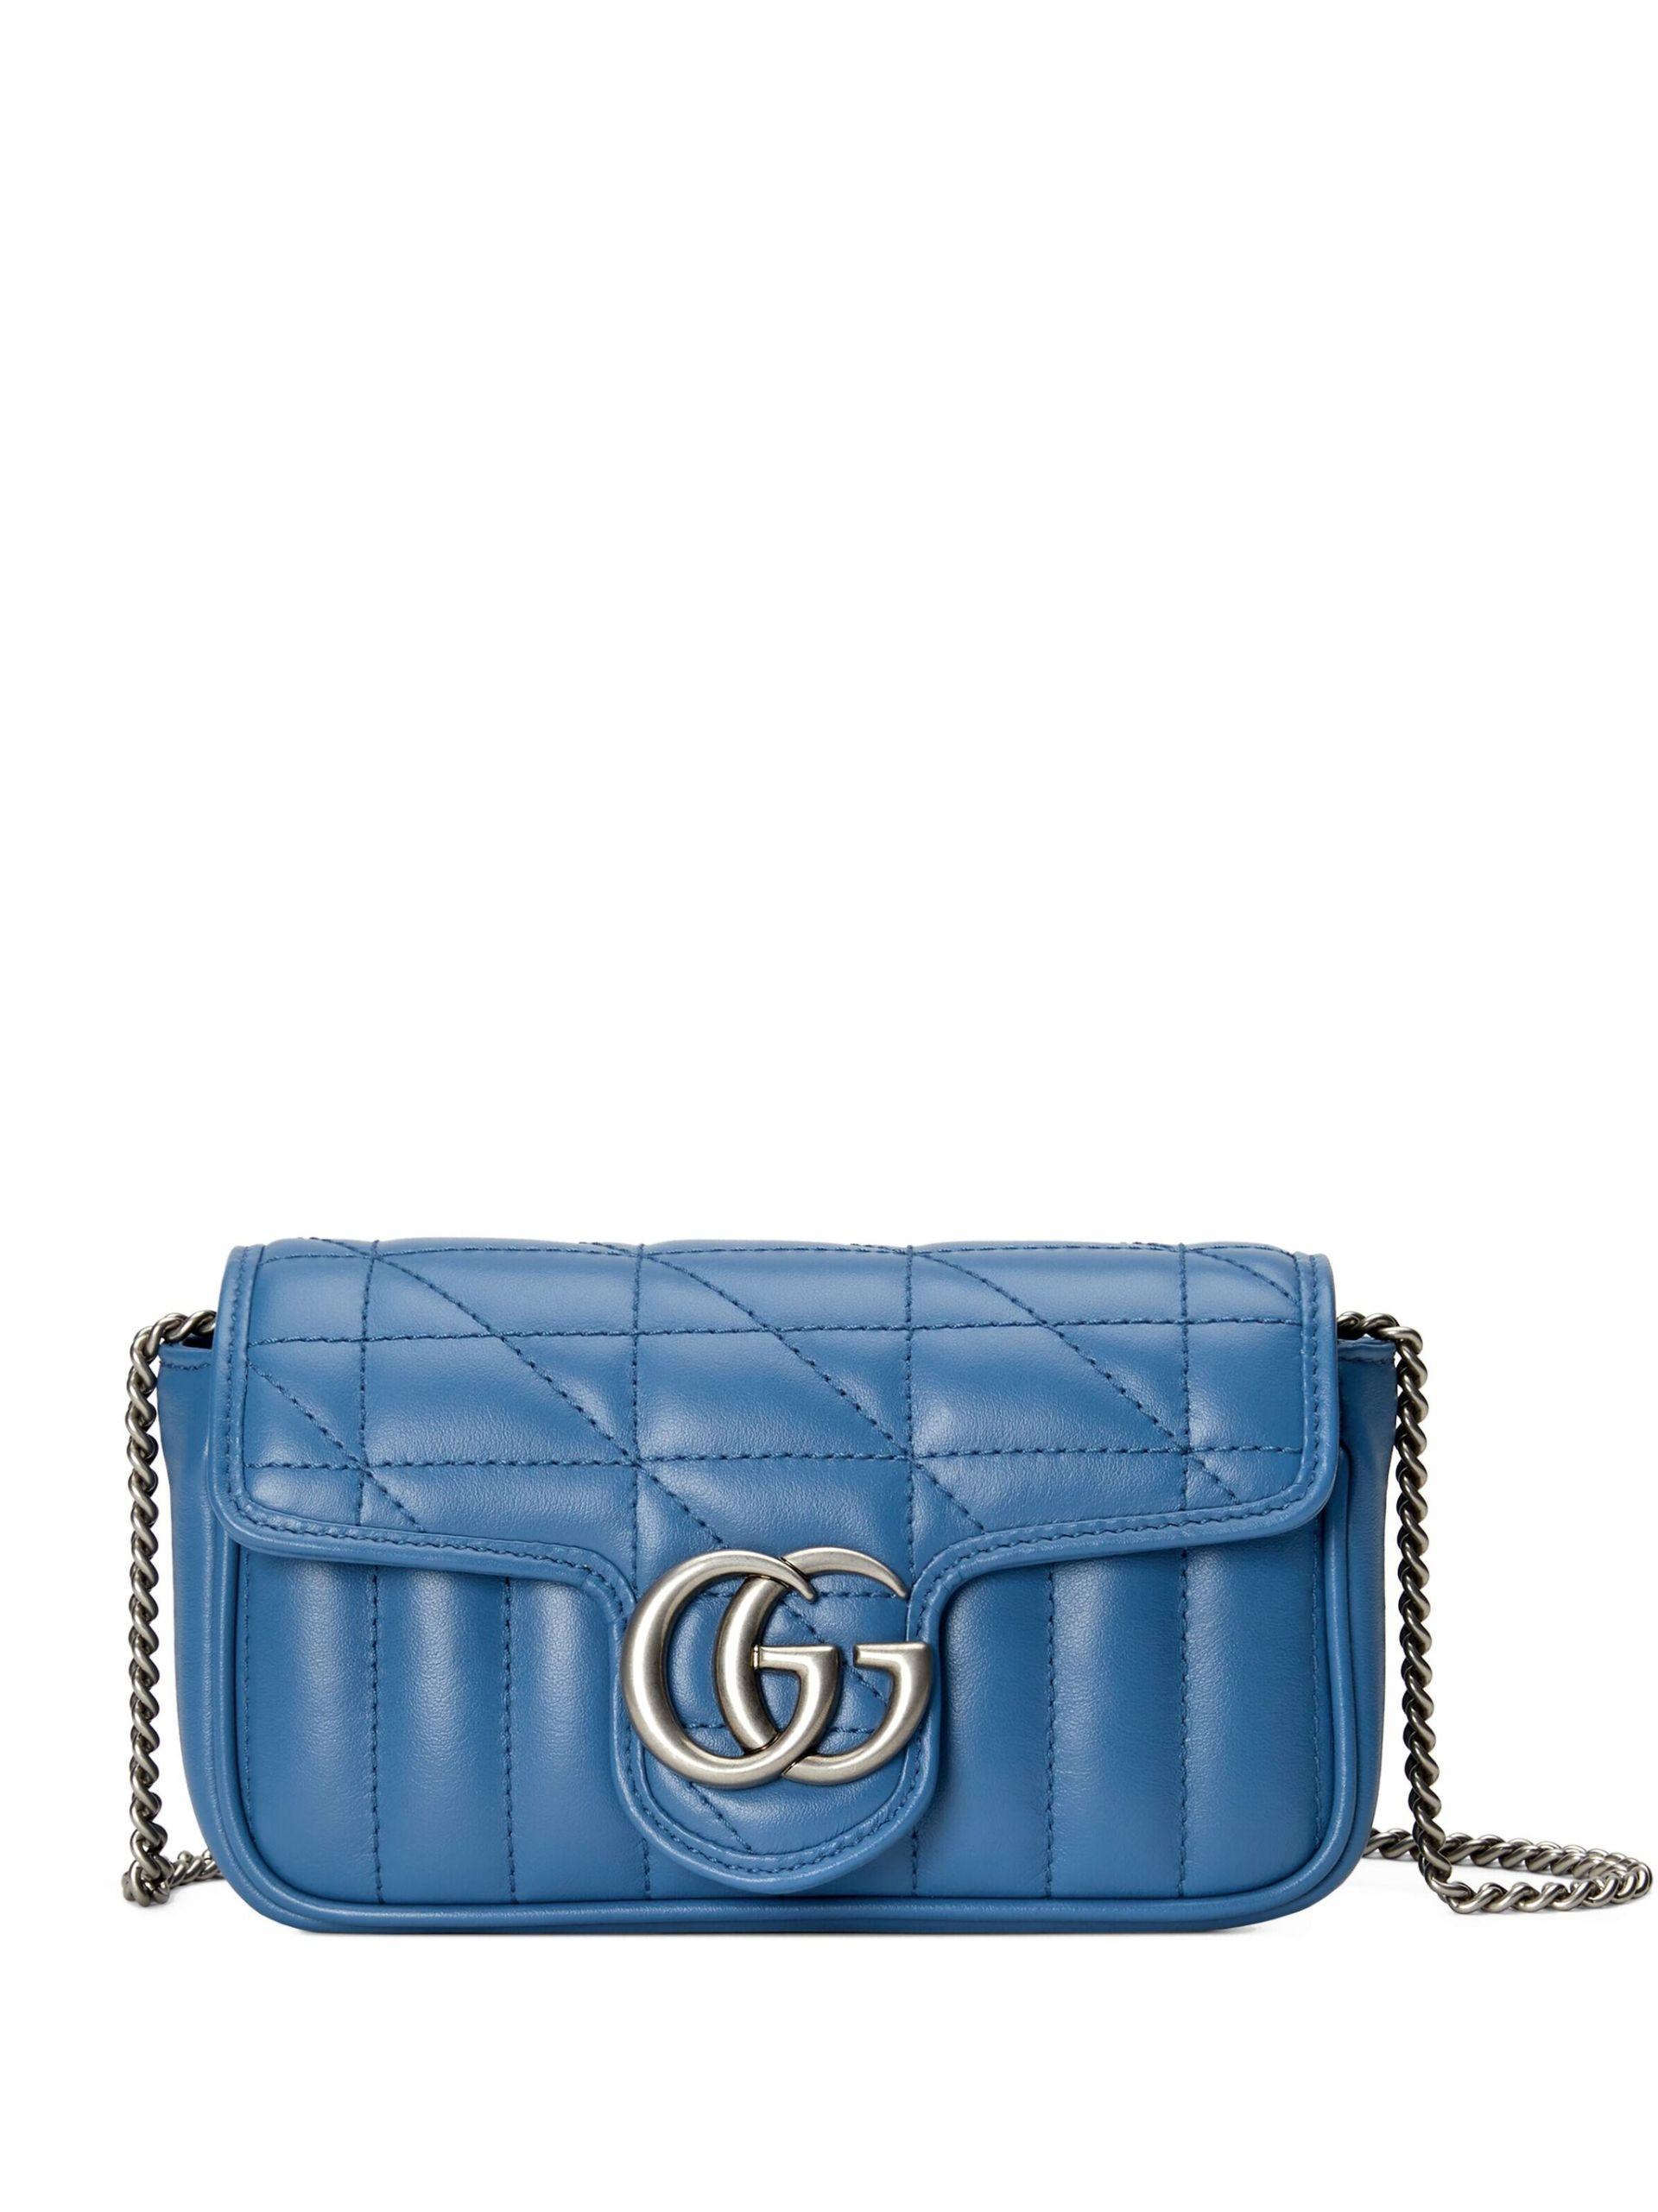 Gucci GG Marmont Super Mini Leather Cross-body Bag in Natural